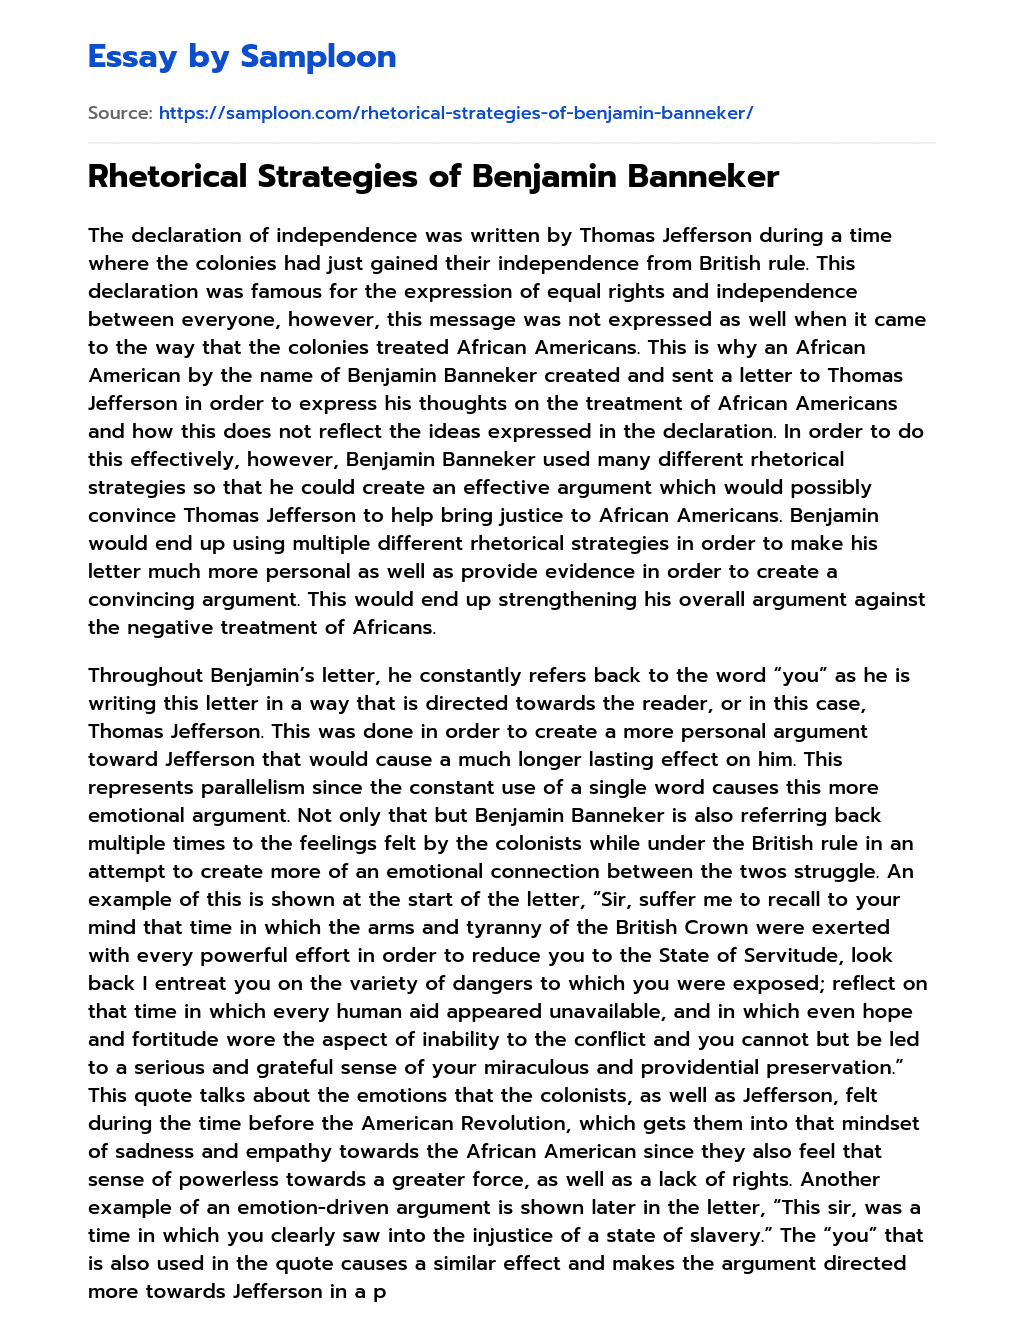 Rhetorical Strategies of Benjamin Banneker essay